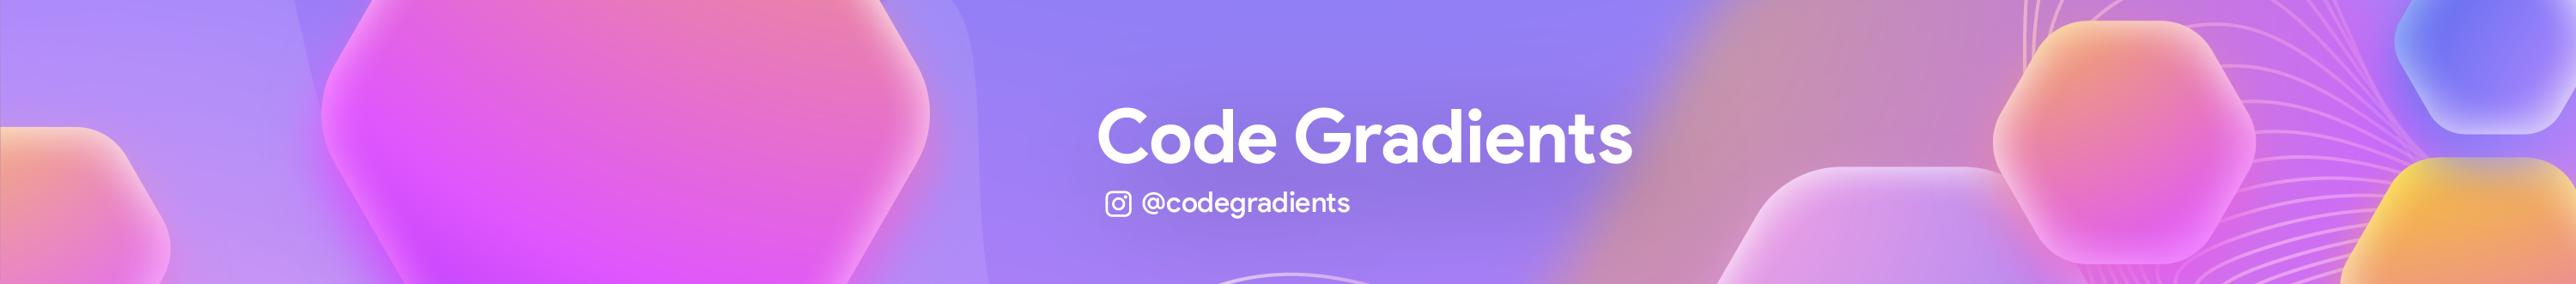 Code Gradients's profile banner